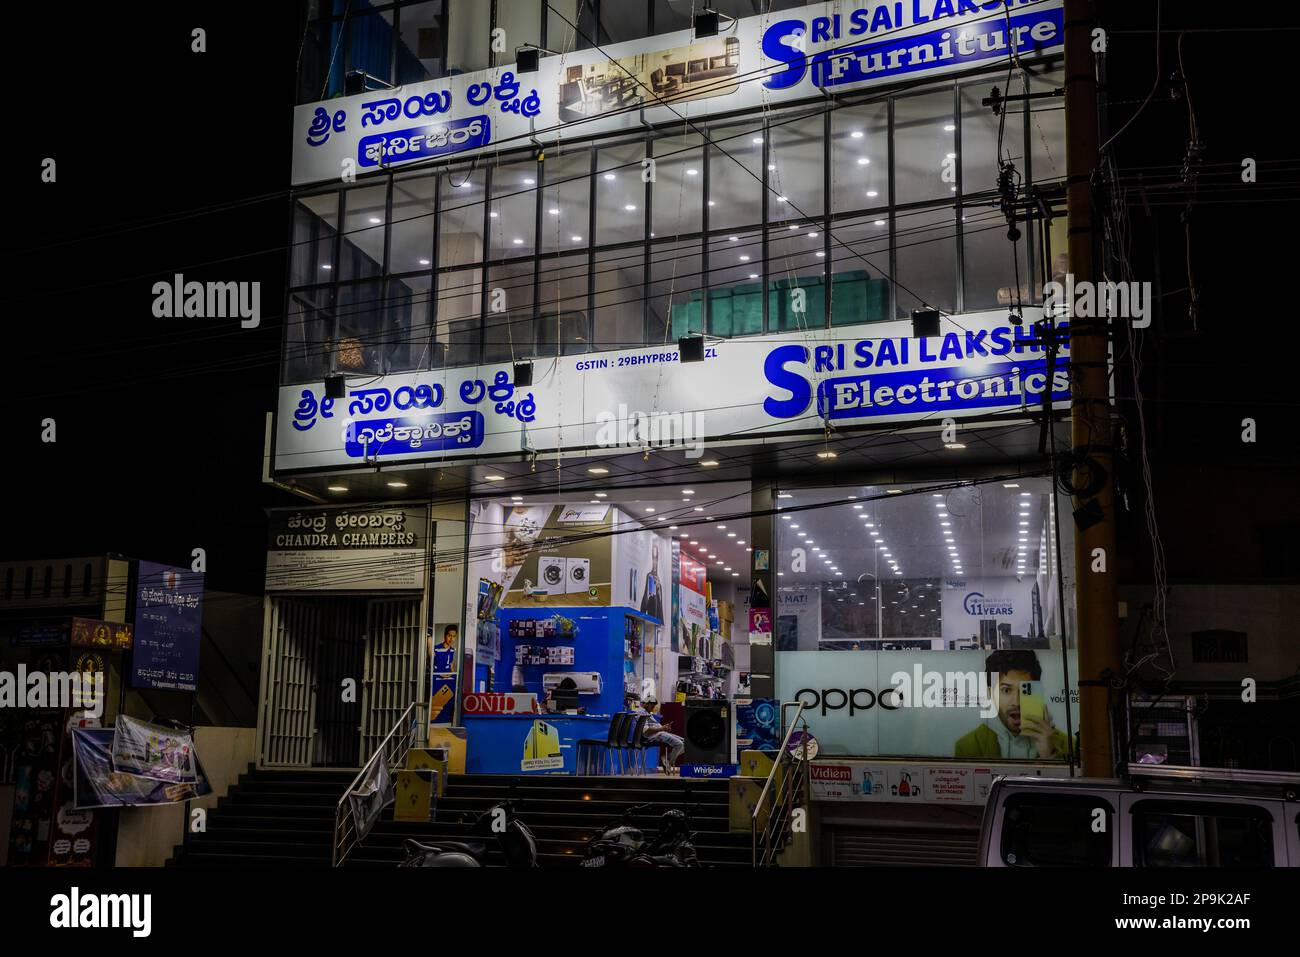 SRI SAI LAXMI Showroom Storefront. A small home Appliances, Televisions, consumer electronics and Furniture shop. MYSORE, KARNTAKA, INDIA - FEB 2023 Stock Photo